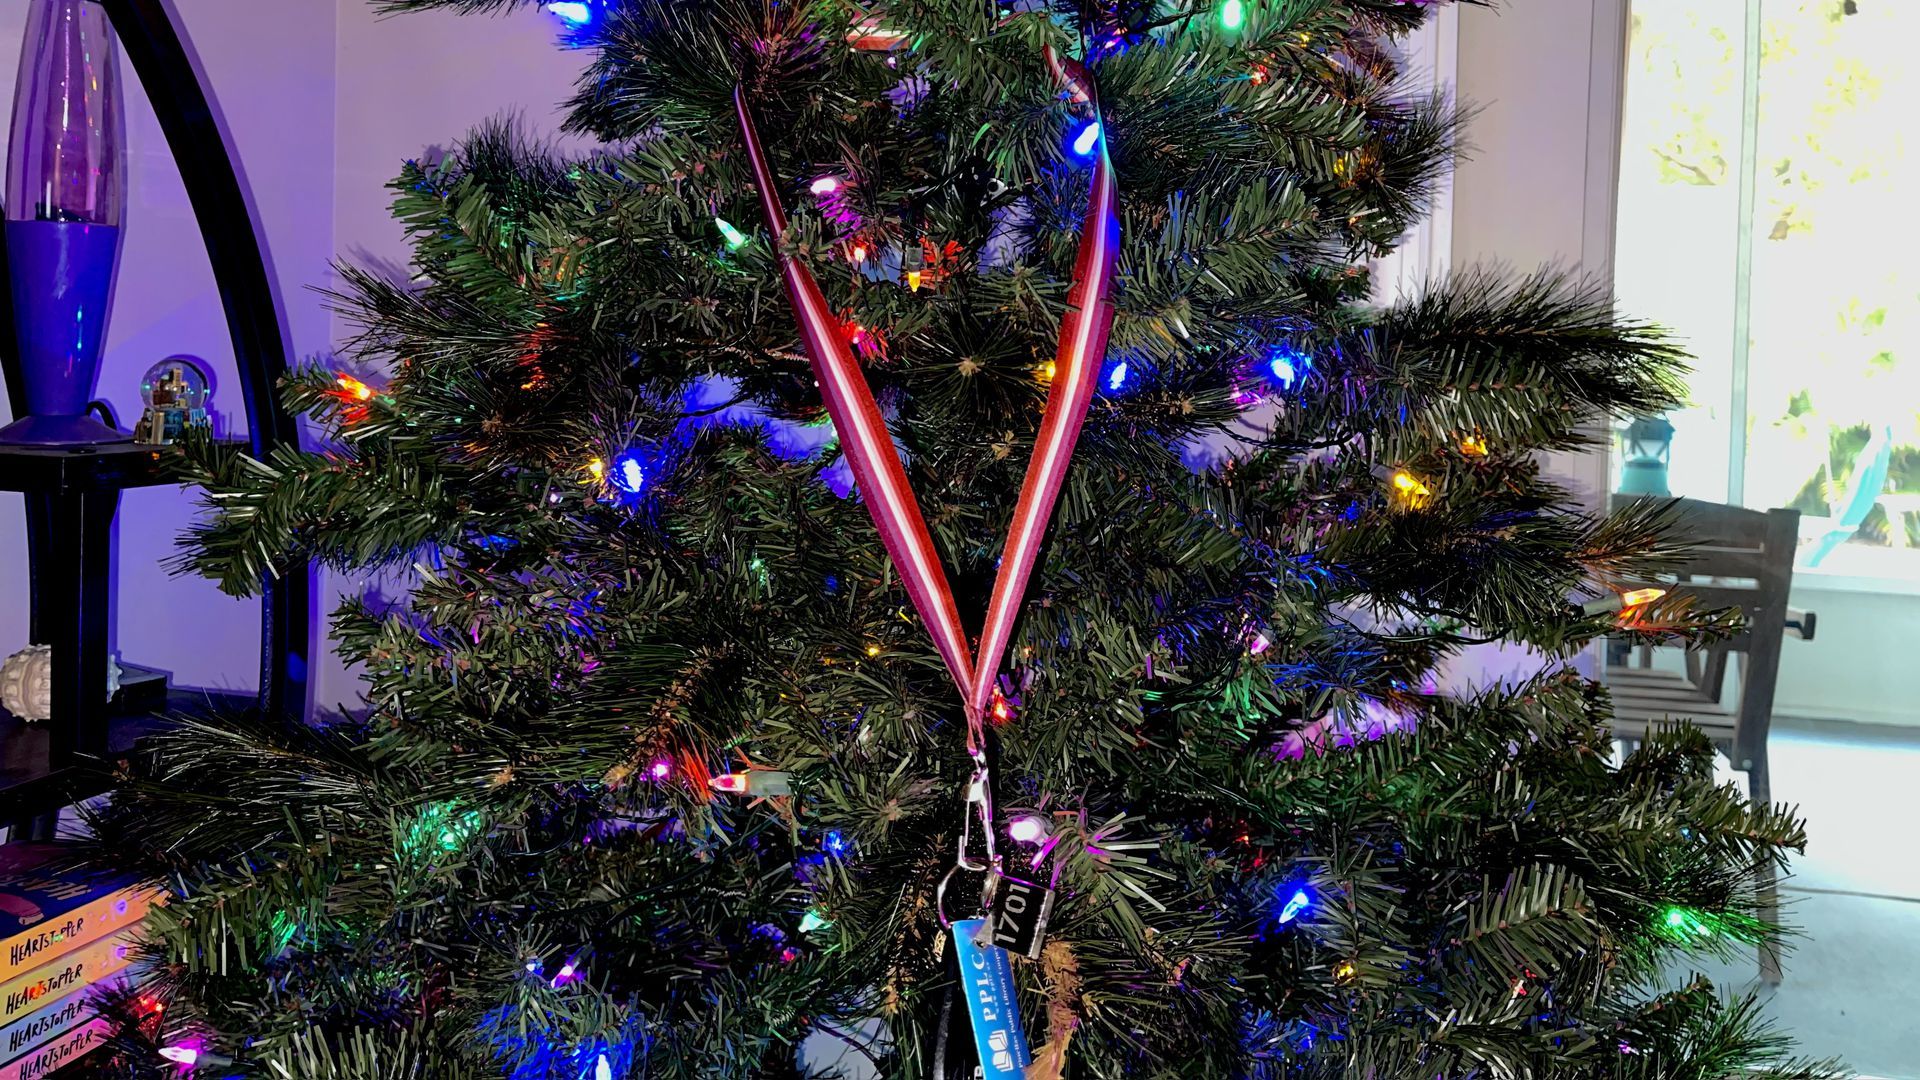 Selene's lesbian flag lanyard hangs on a Christmas tree with lights.